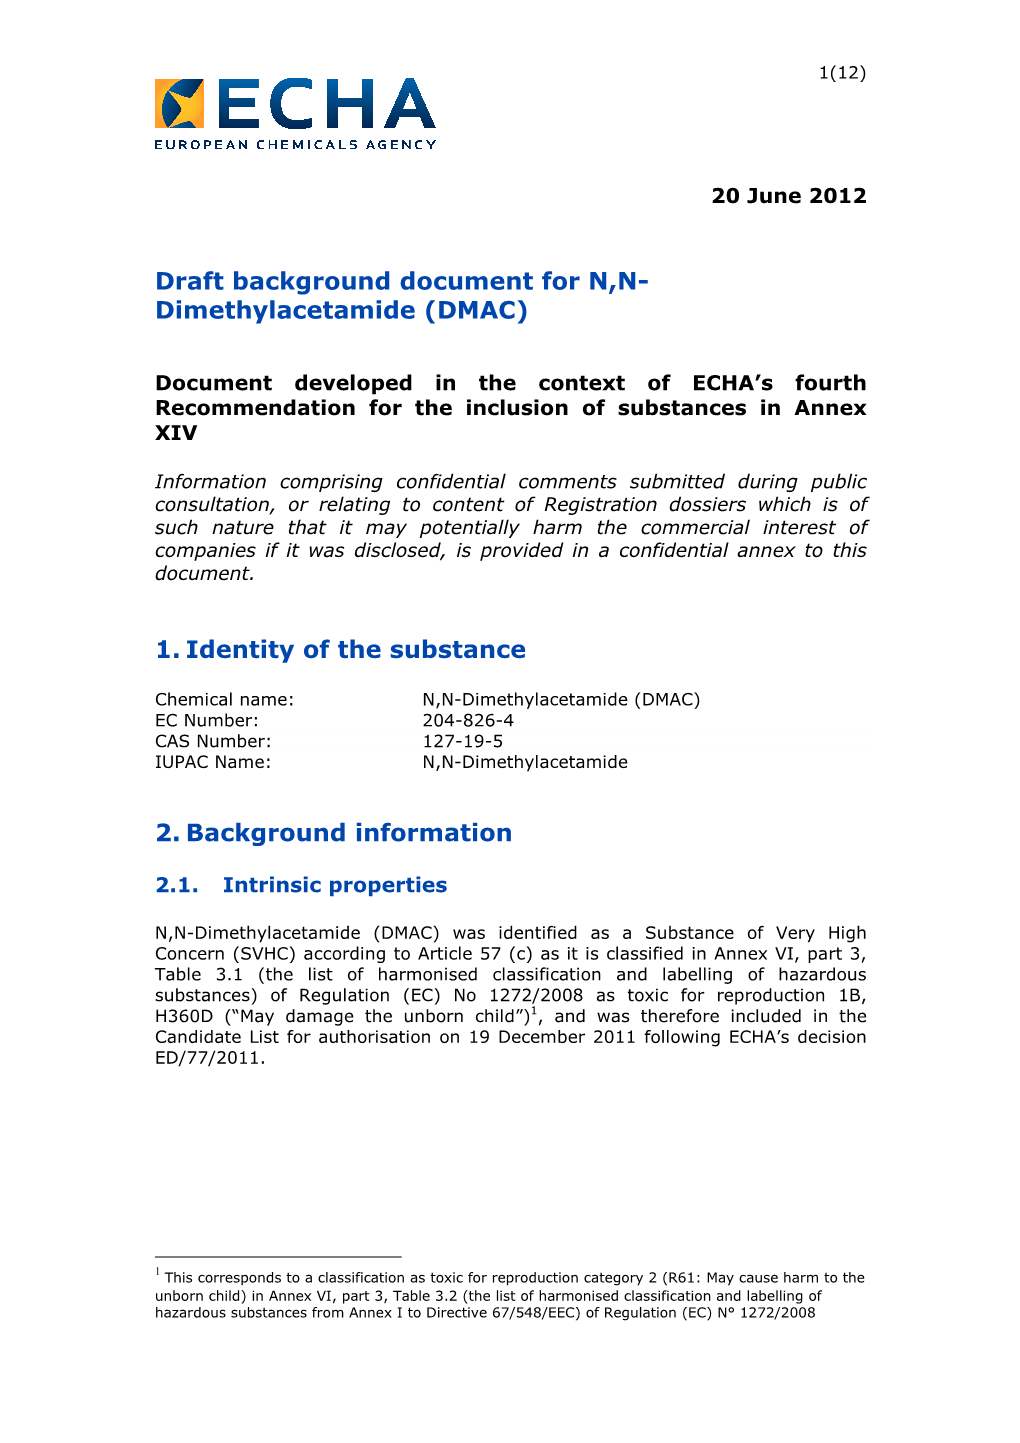 Draft Background Document for N,N- Dimethylacetamide (DMAC)